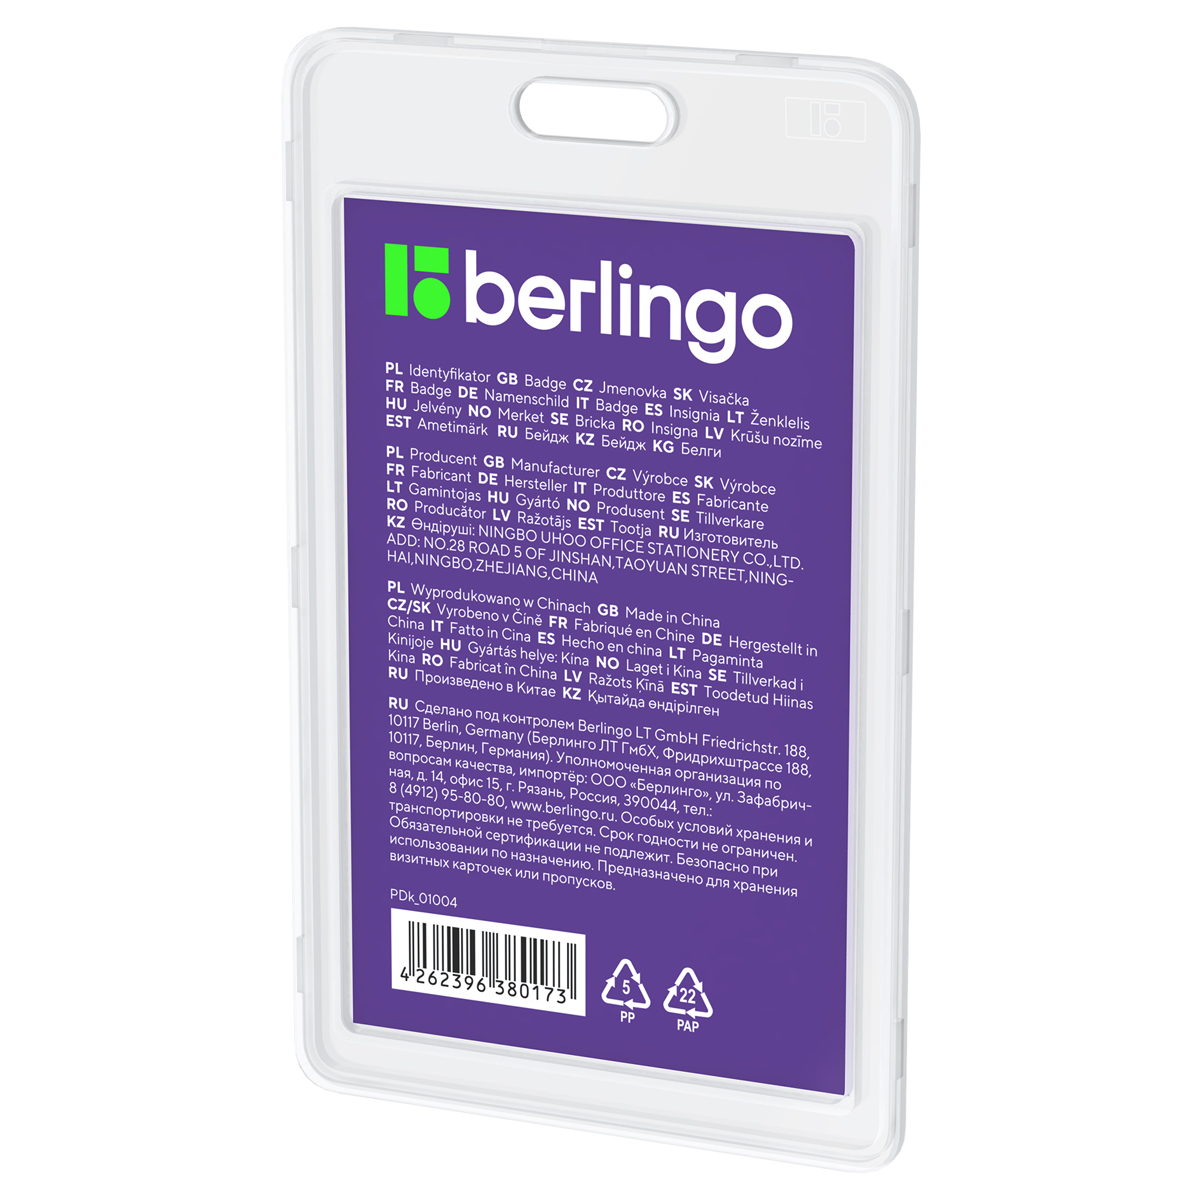   Berlingo "ID 100", 85*55,  